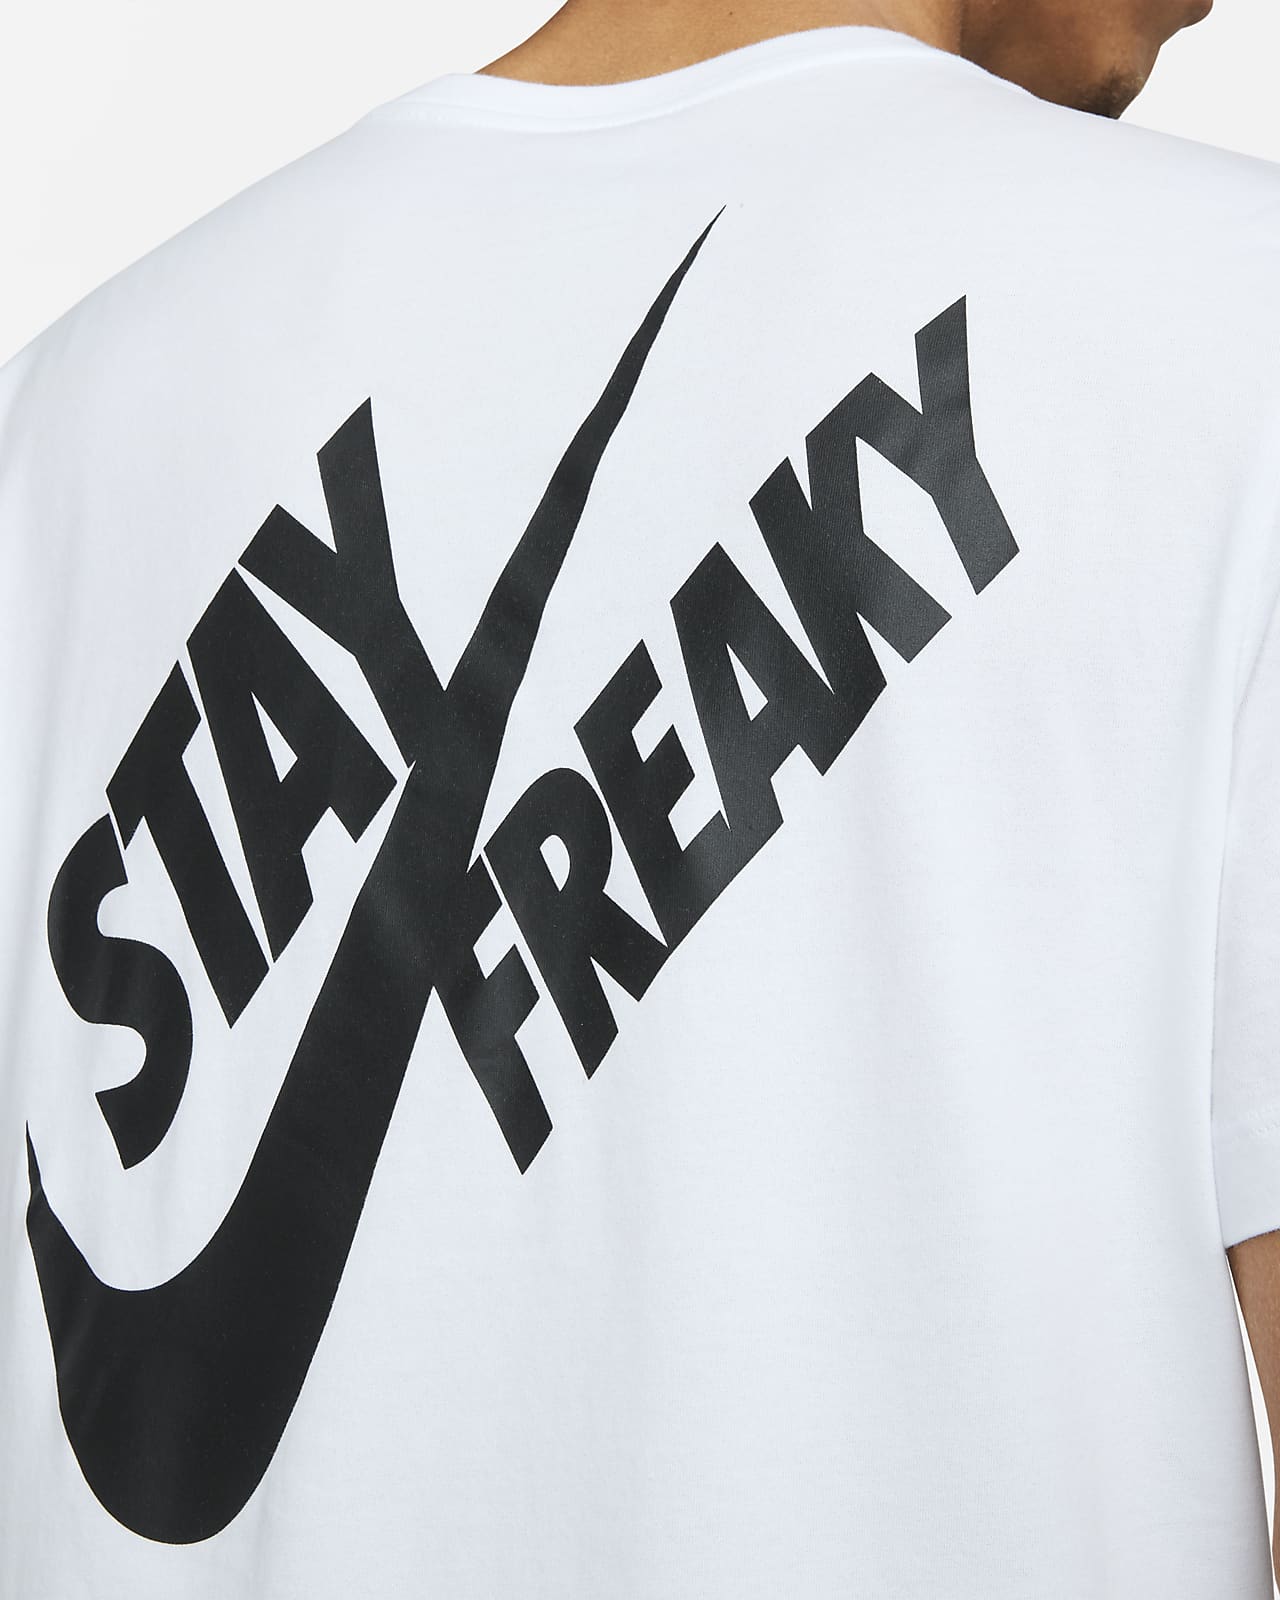 Men's Basketball T-Shirt Nike Dri-FIT Giannis “Freak”